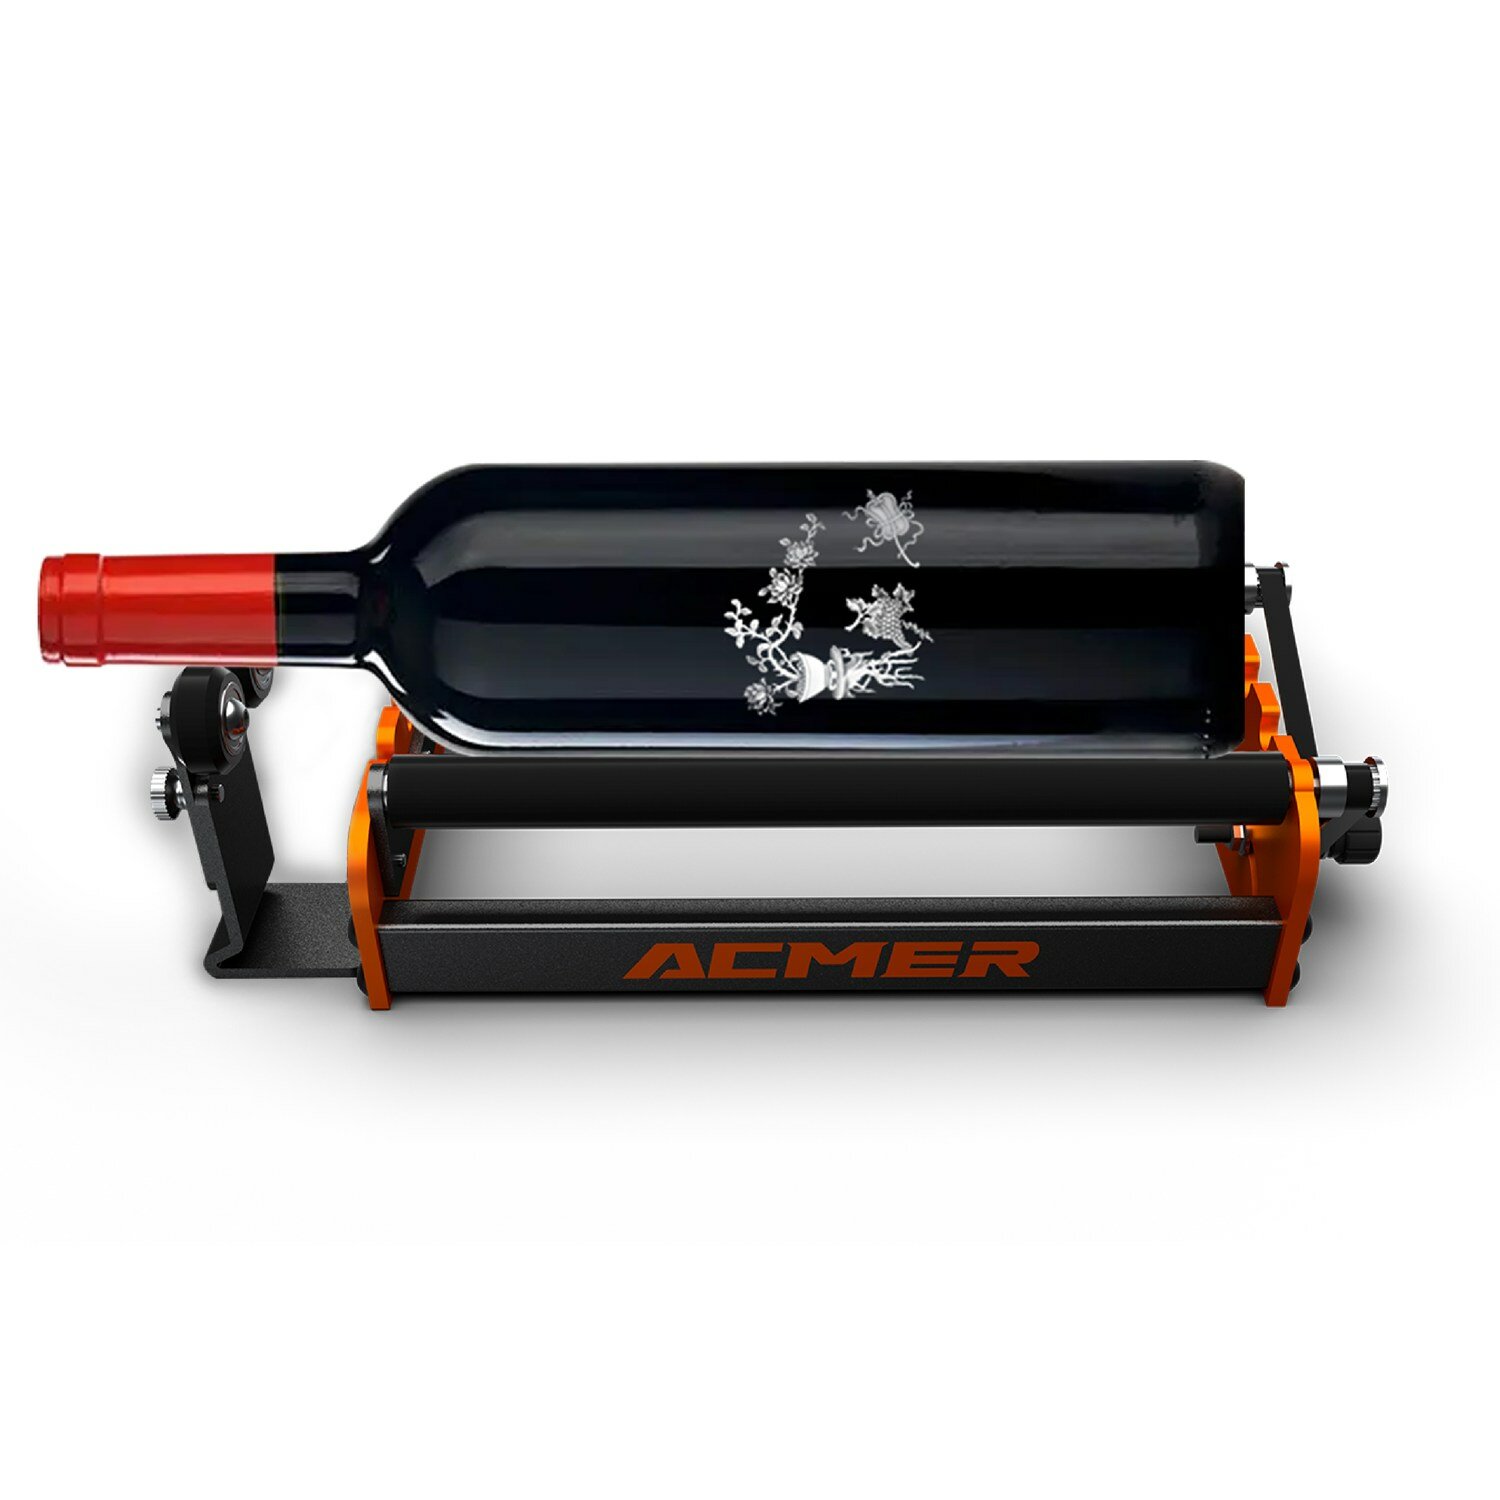 ACMER M2 Laser Rotary Roller z EU za $74.00 / ~295zł